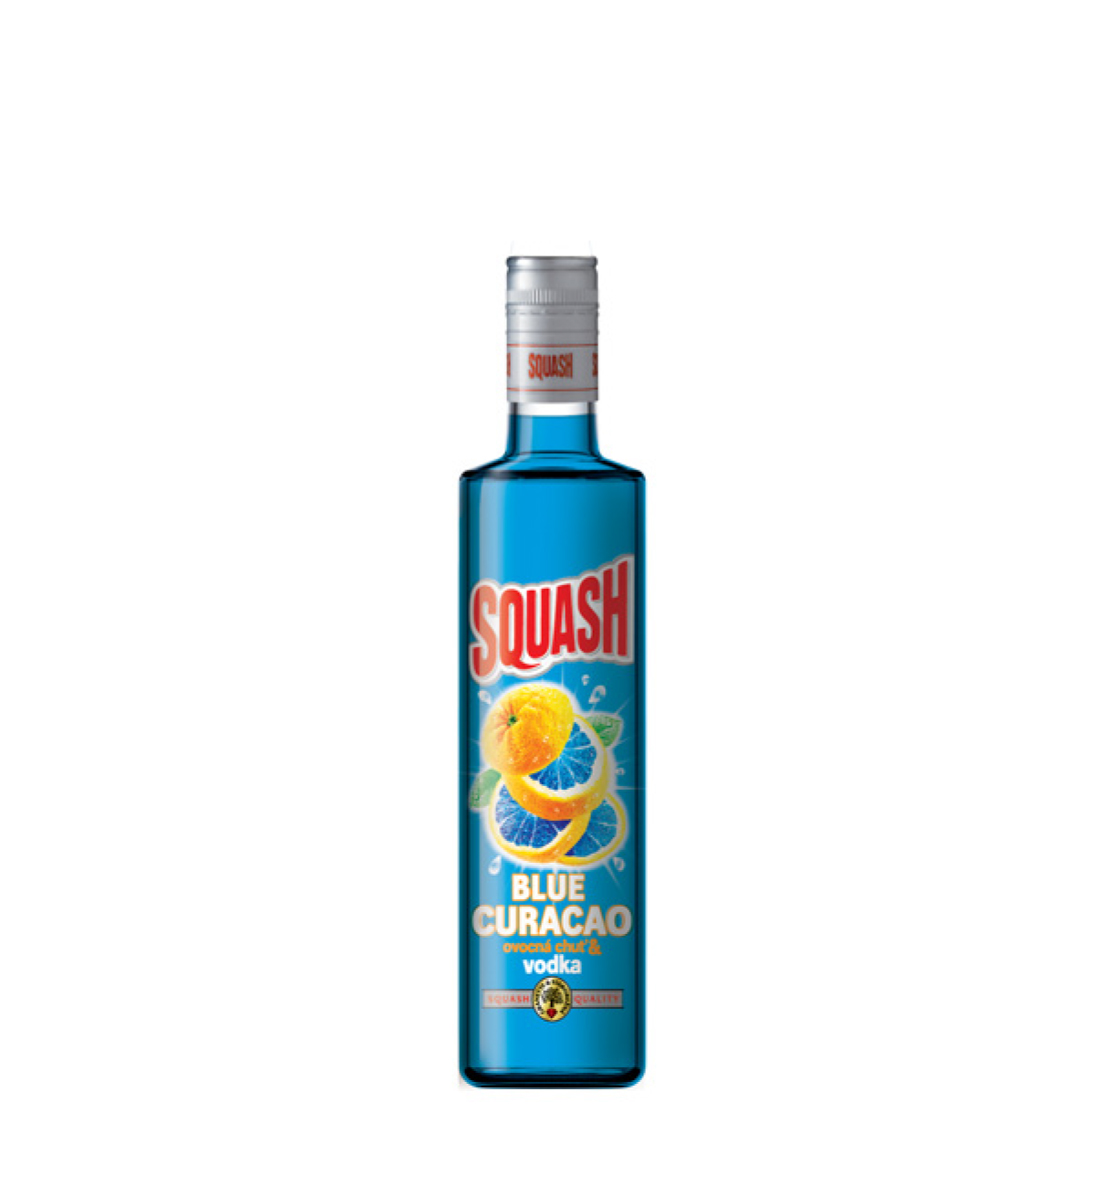 Lichior Squash Blue Curacao 0.5L